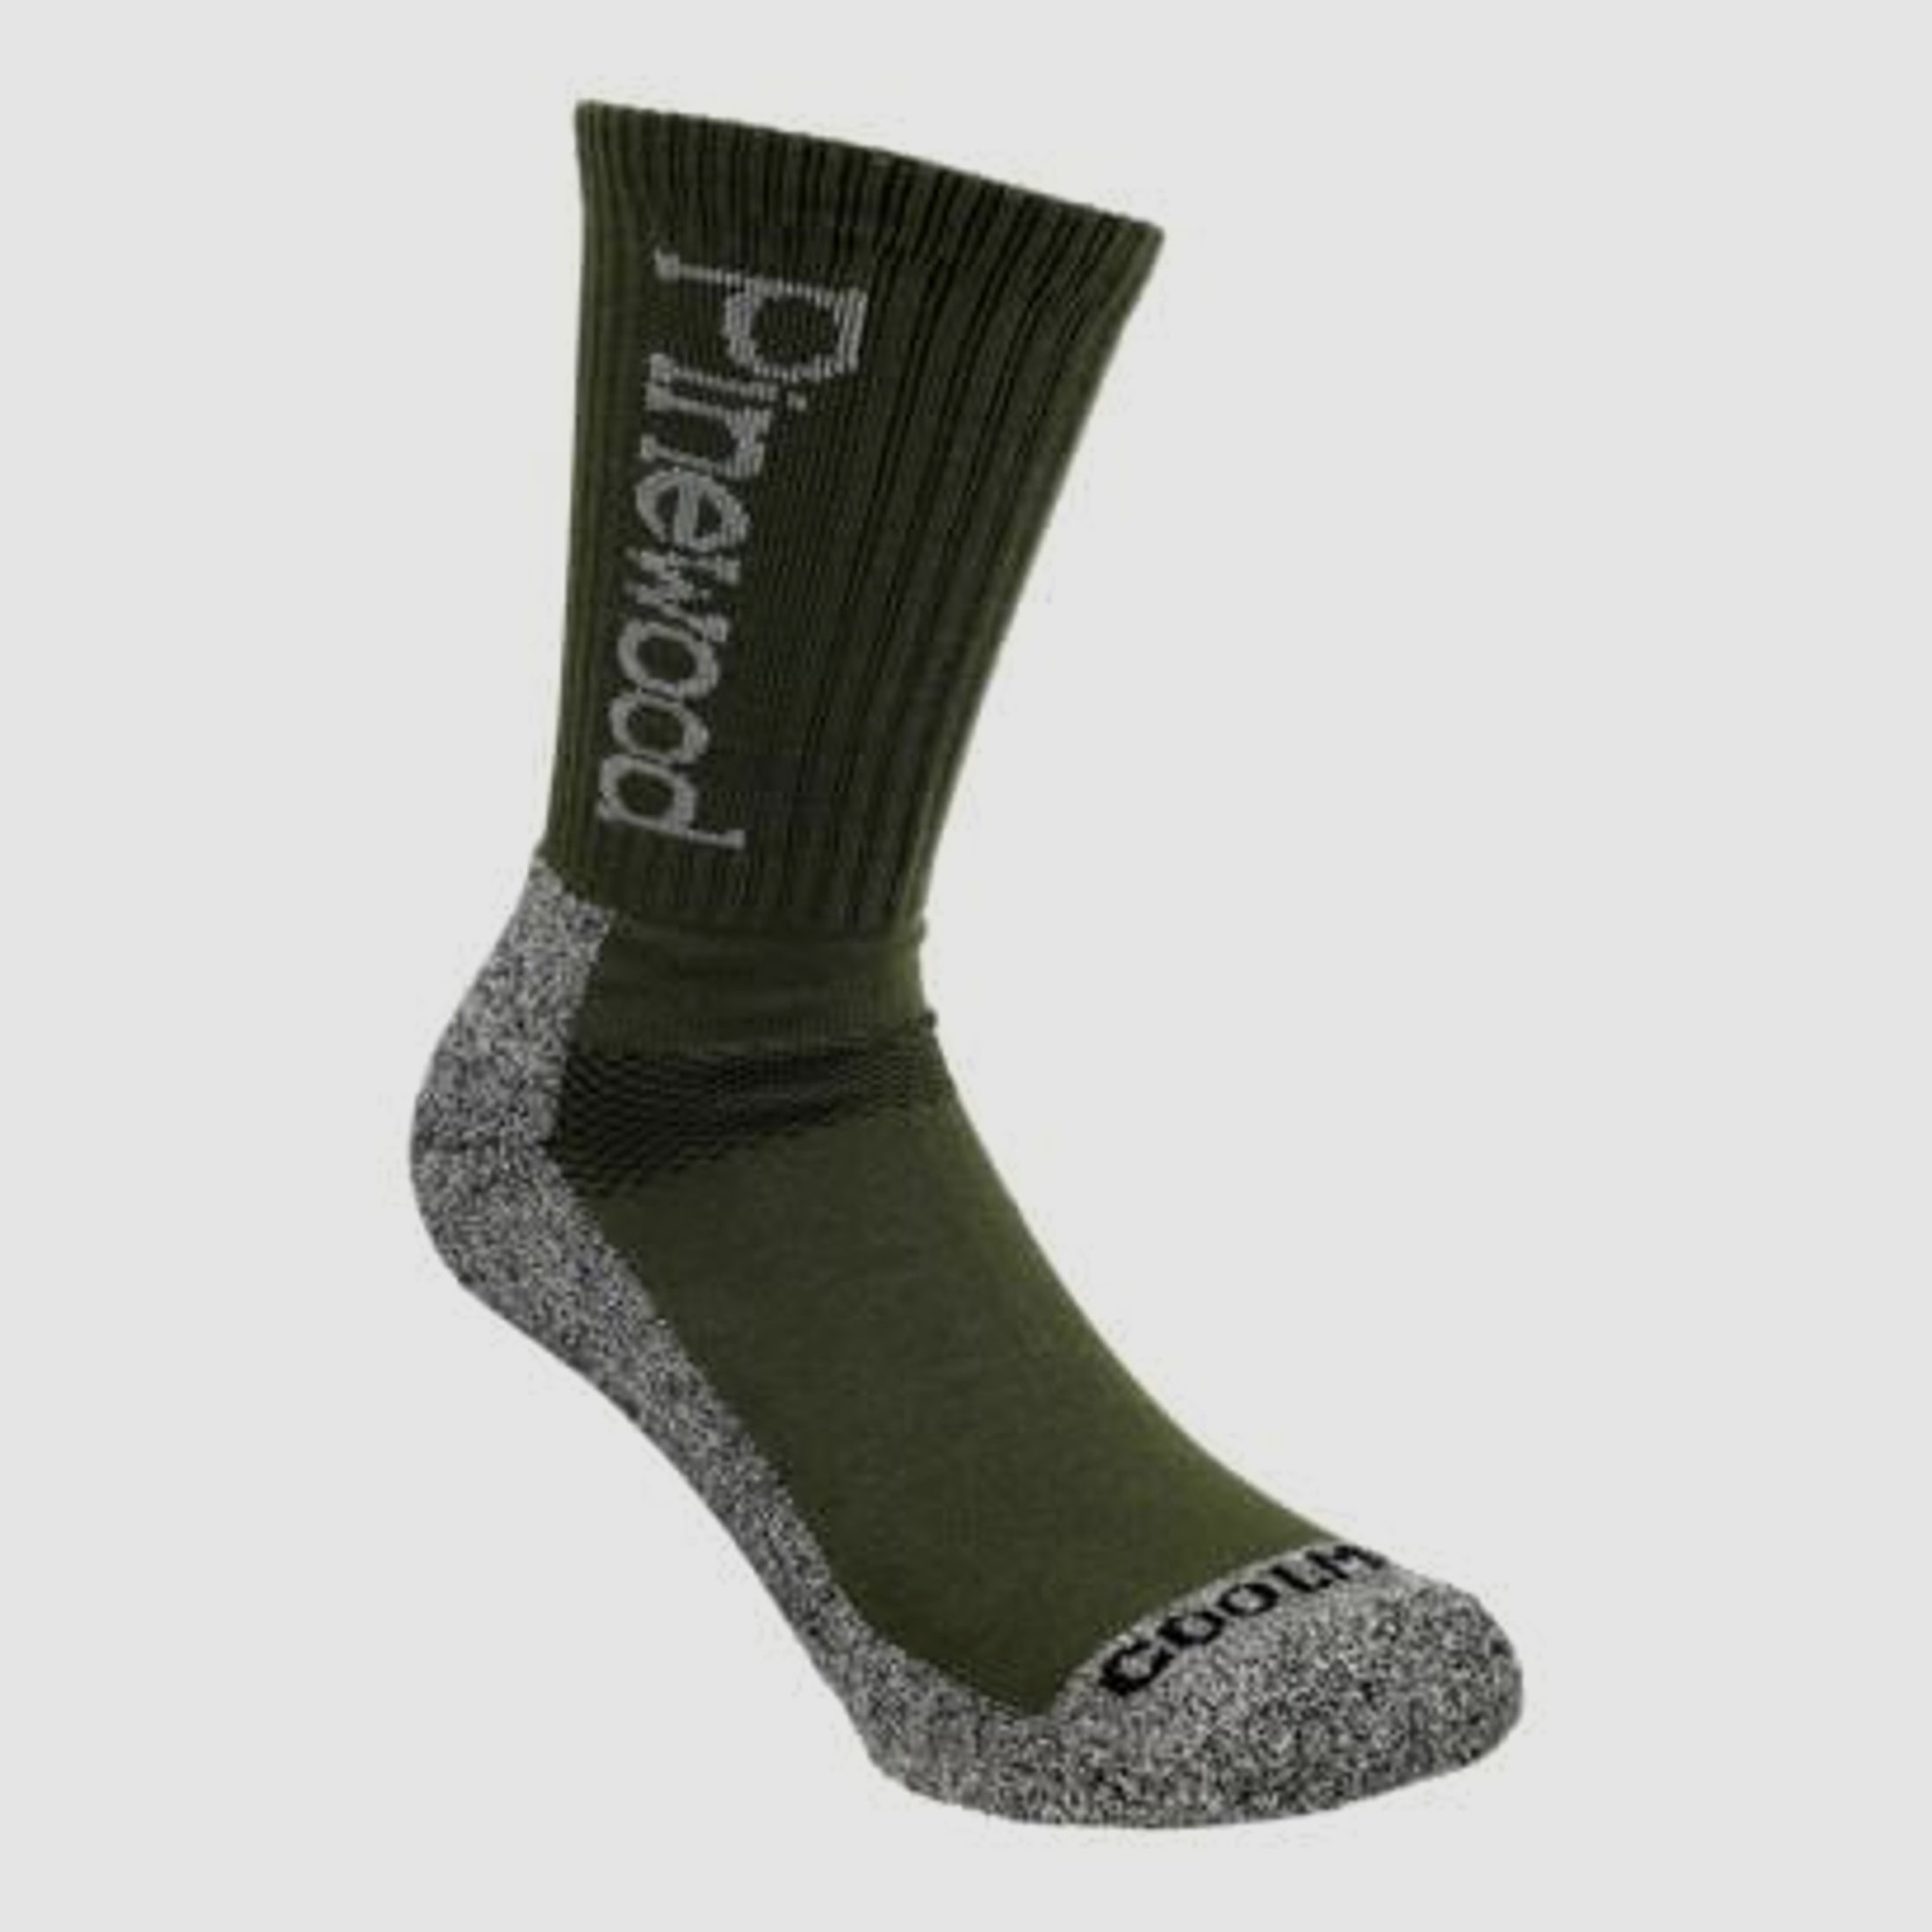 Pinewood Socken Medium 2er Pack Unisex Coolmax - Grün  46-48